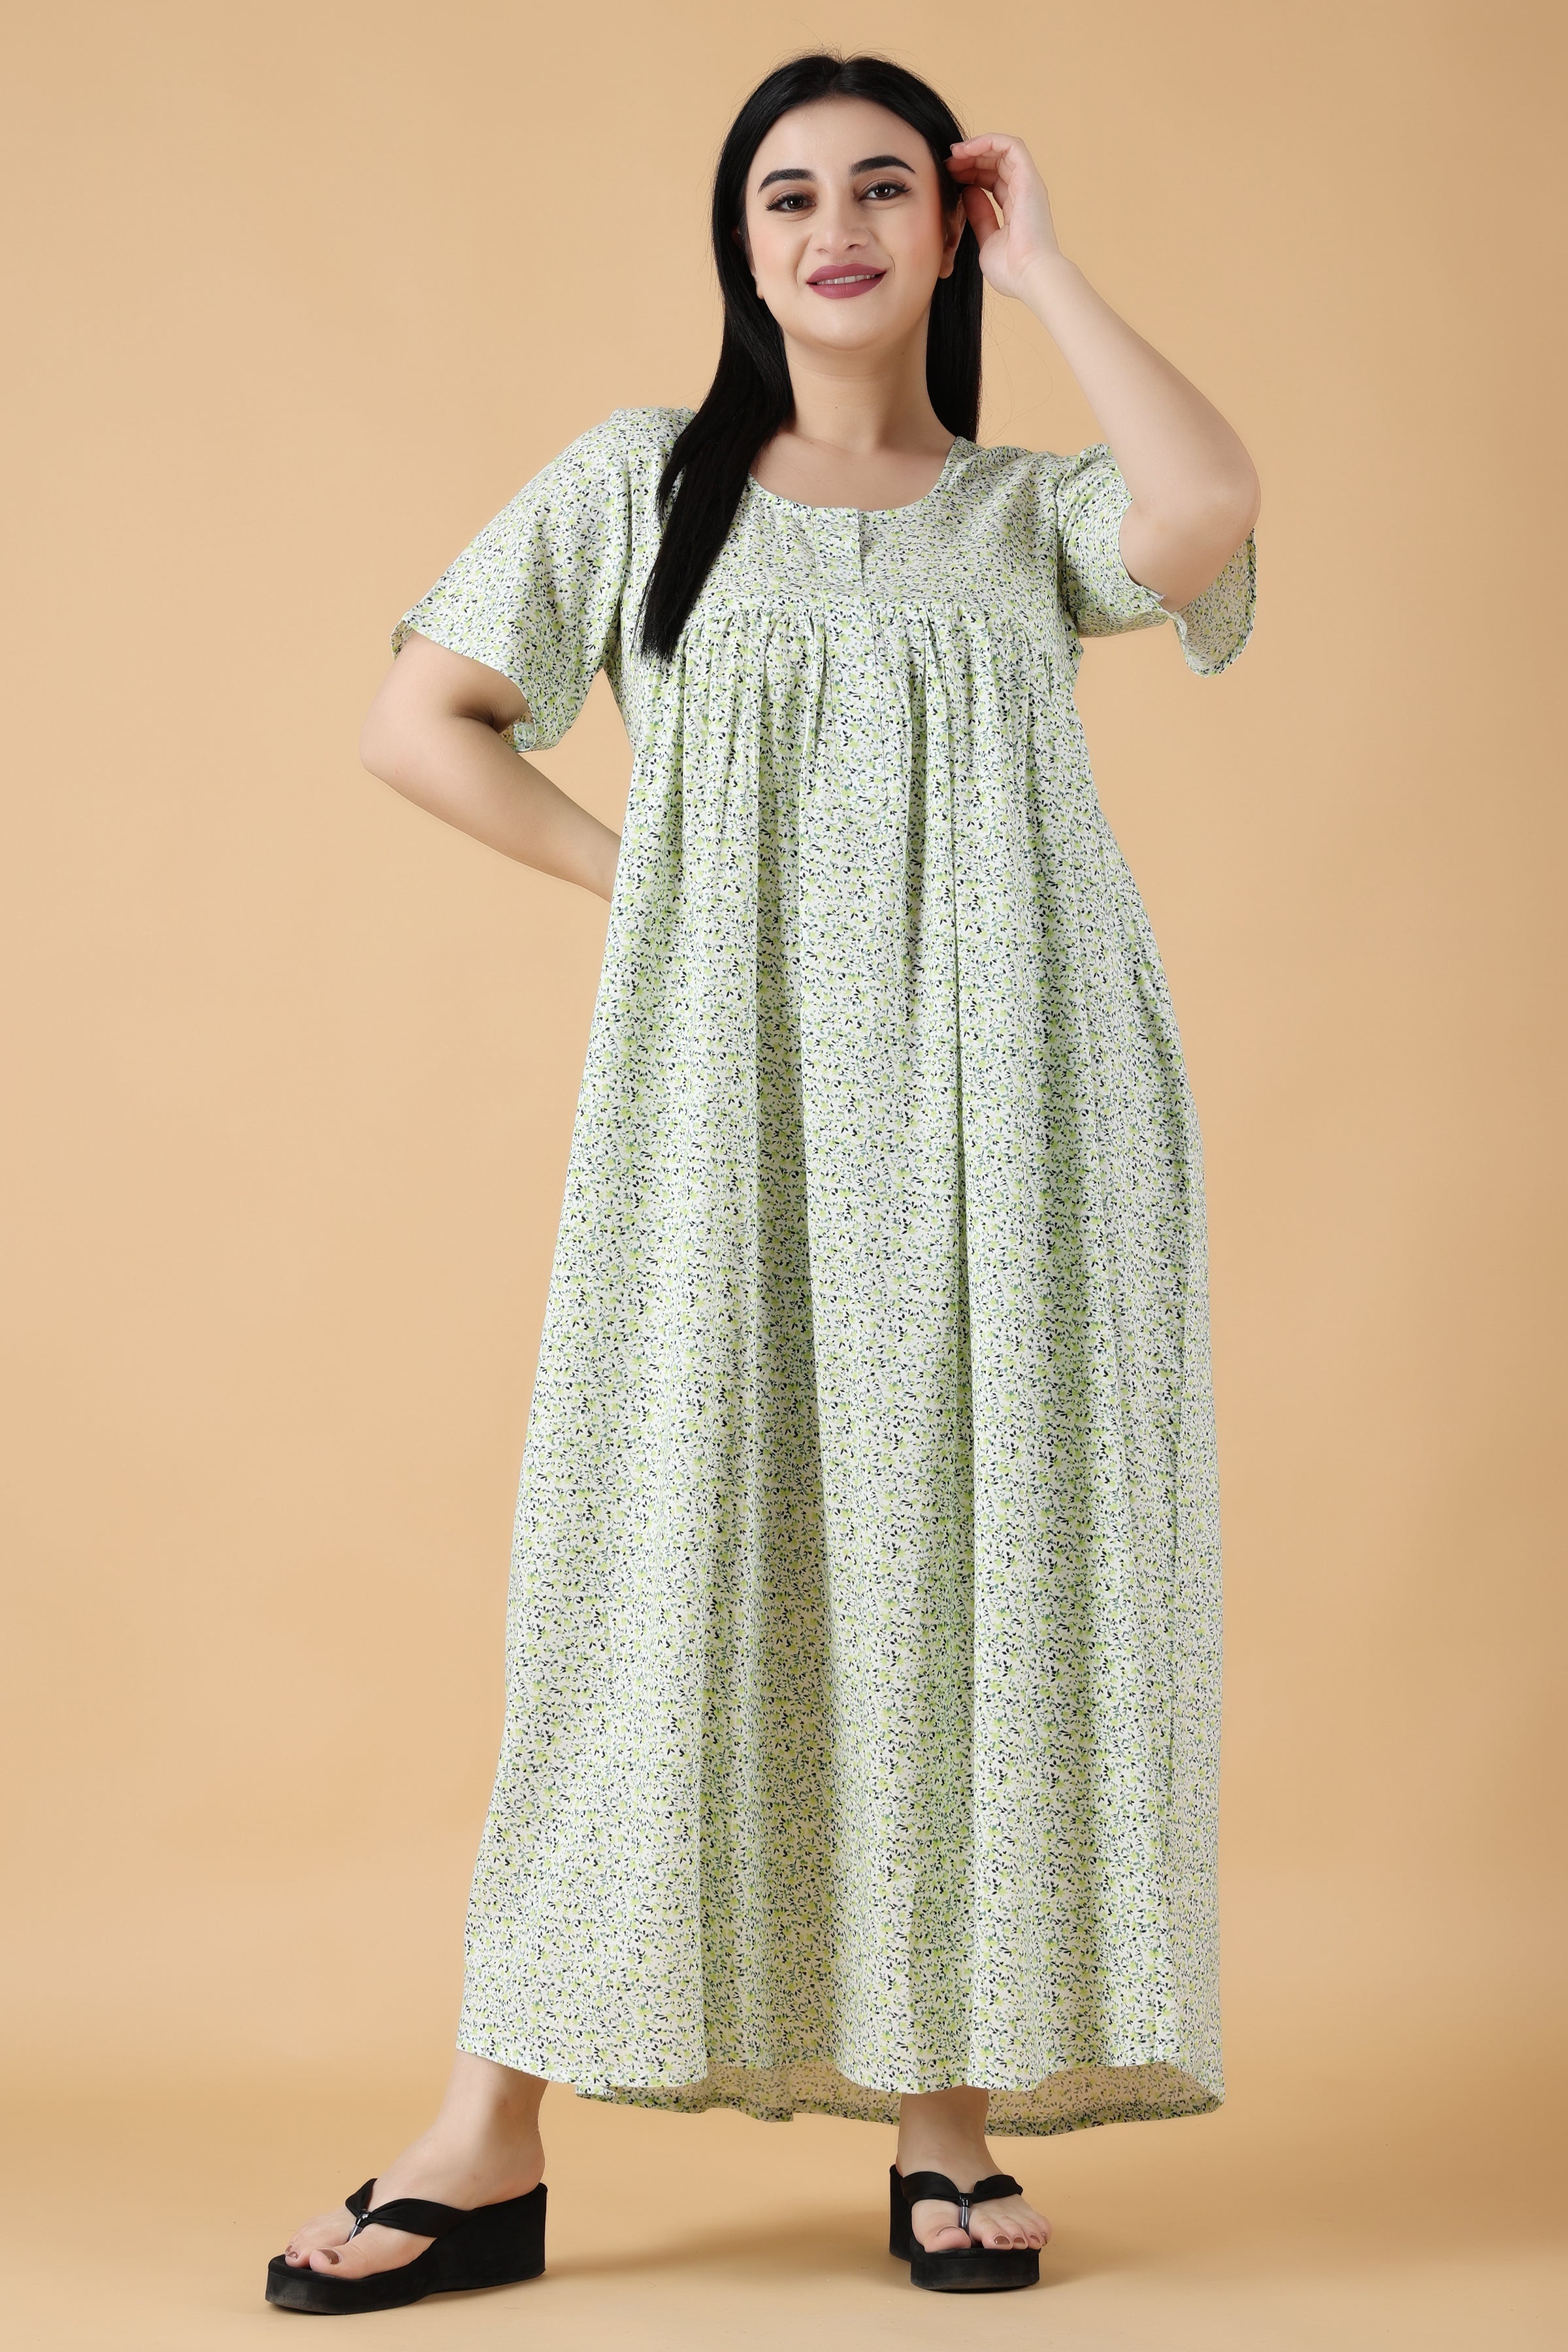 Buy APRATIM Womens Cotton Nightwear Gown Nighty Cotton Sleepwear Nightgown  Maxi Dress Blue at Amazon.in